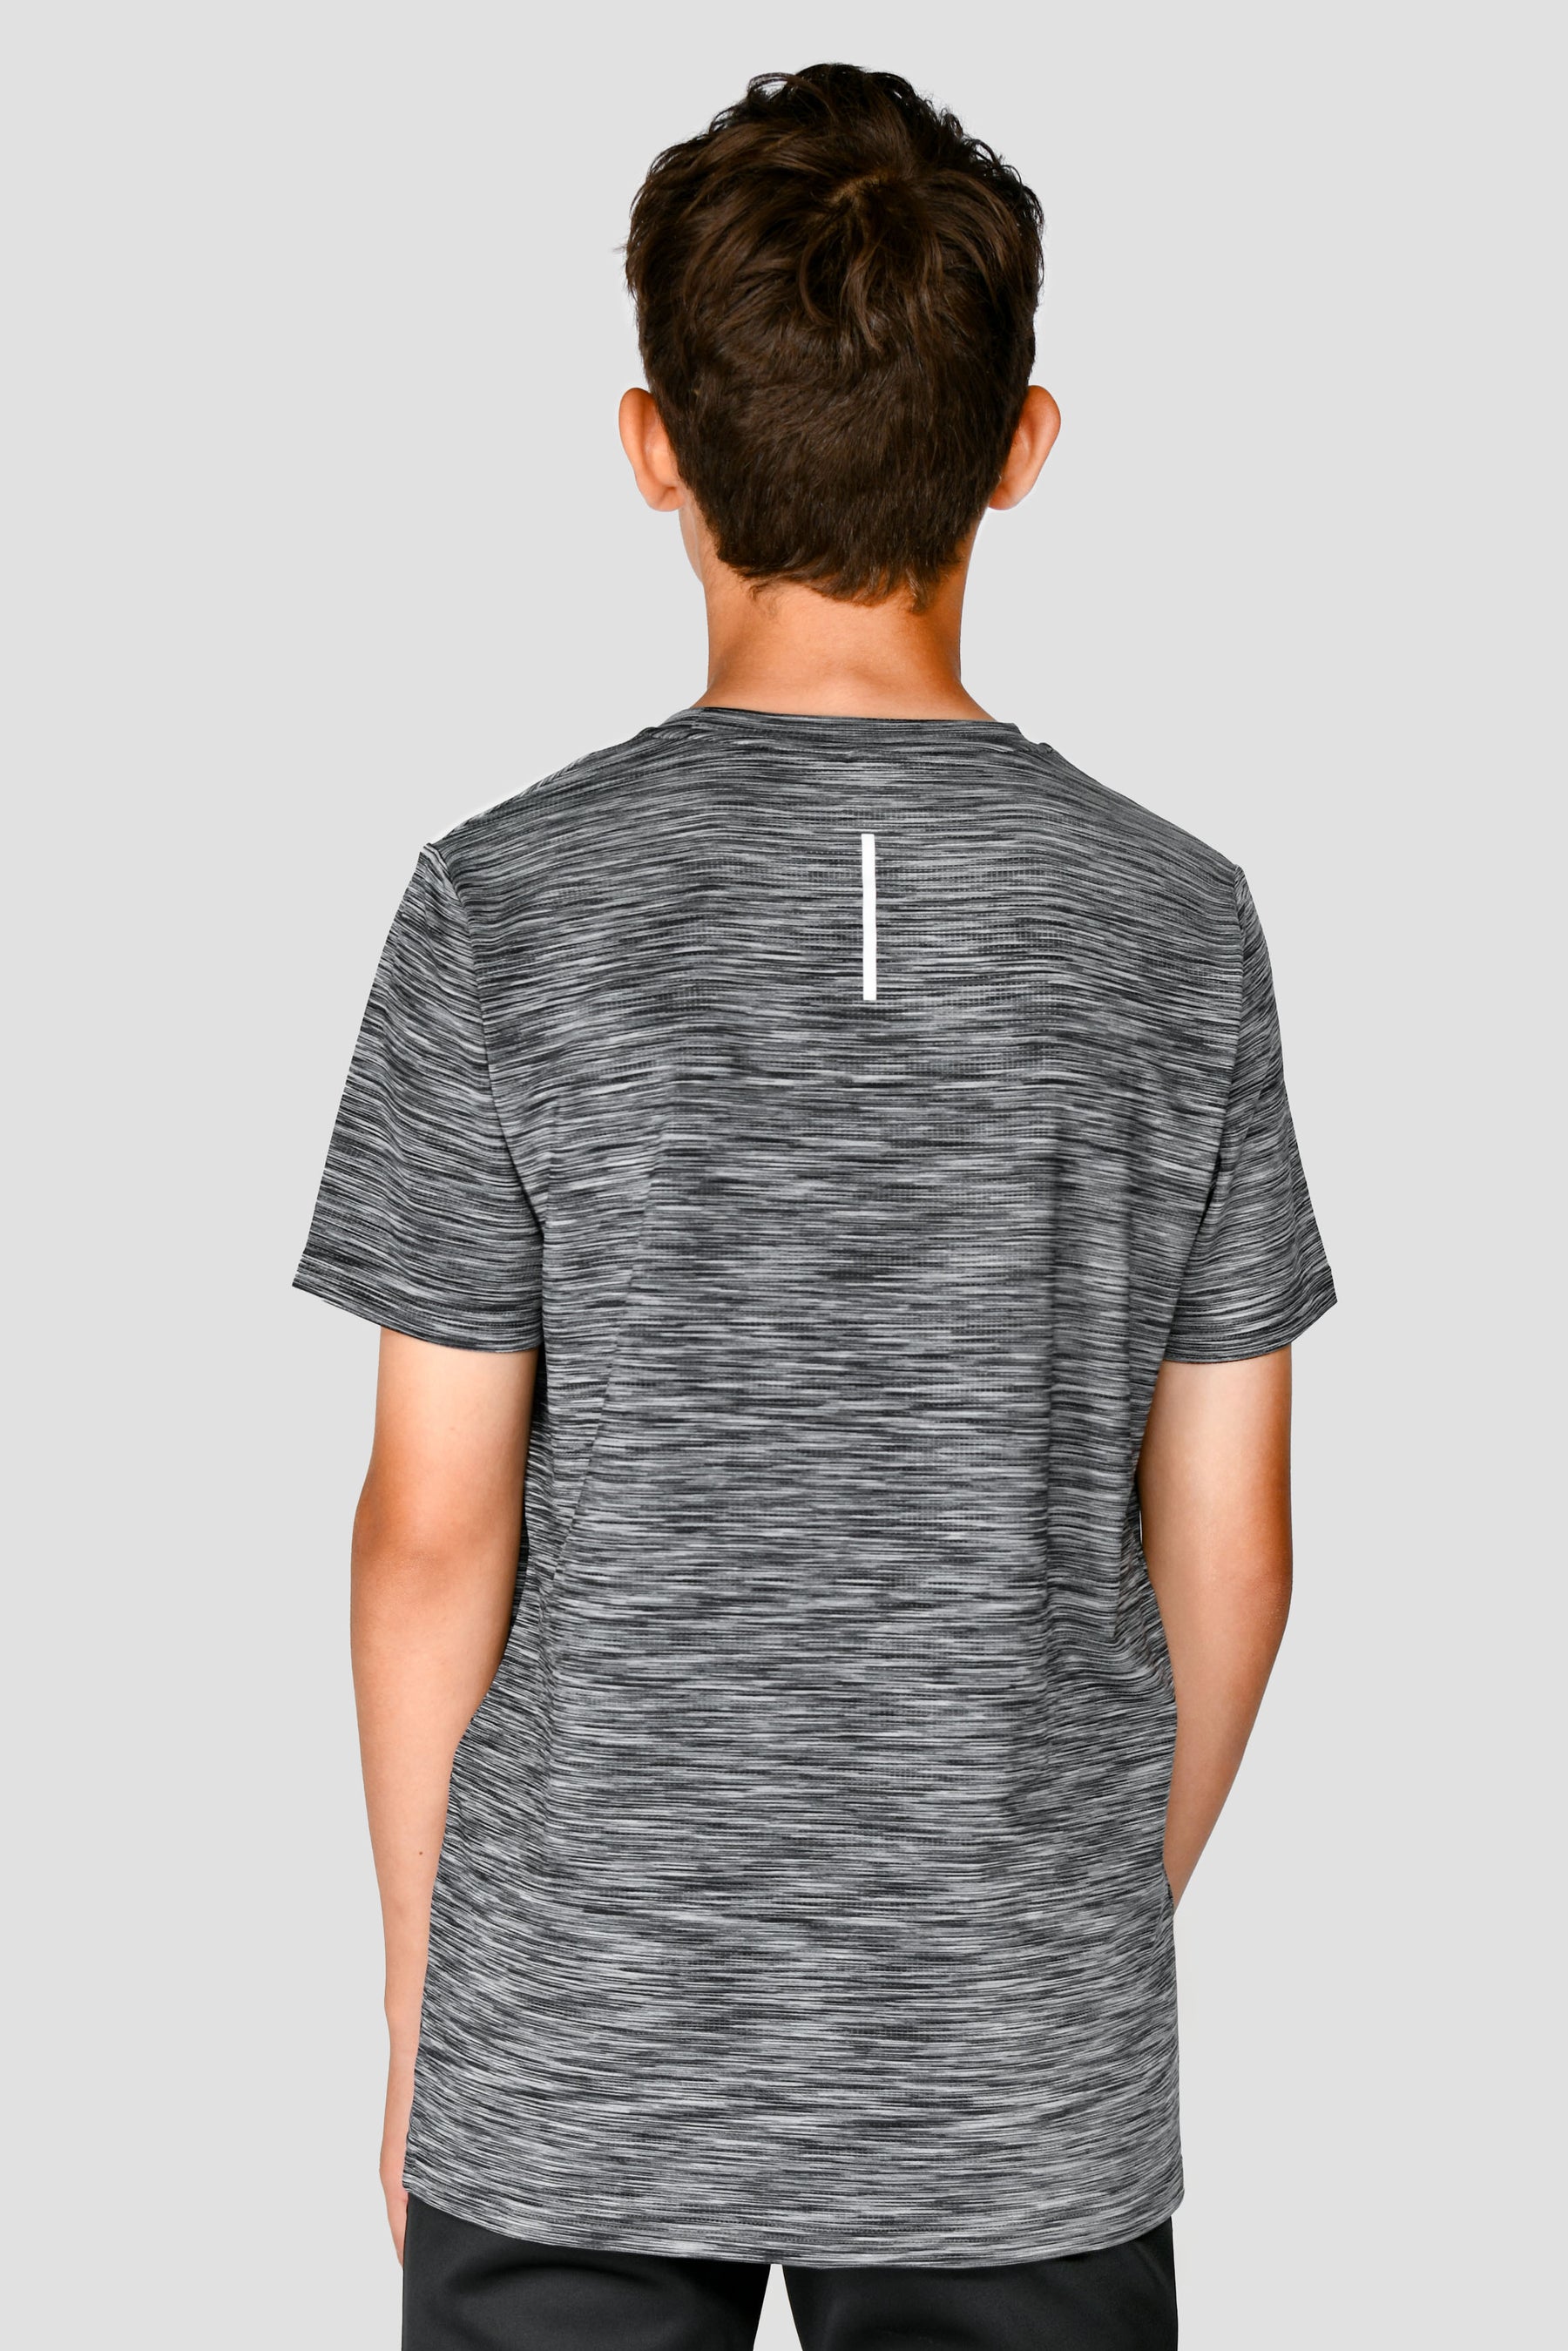 Junior Trail 2.0 T-Shirt - Black/Dark Slate Multi